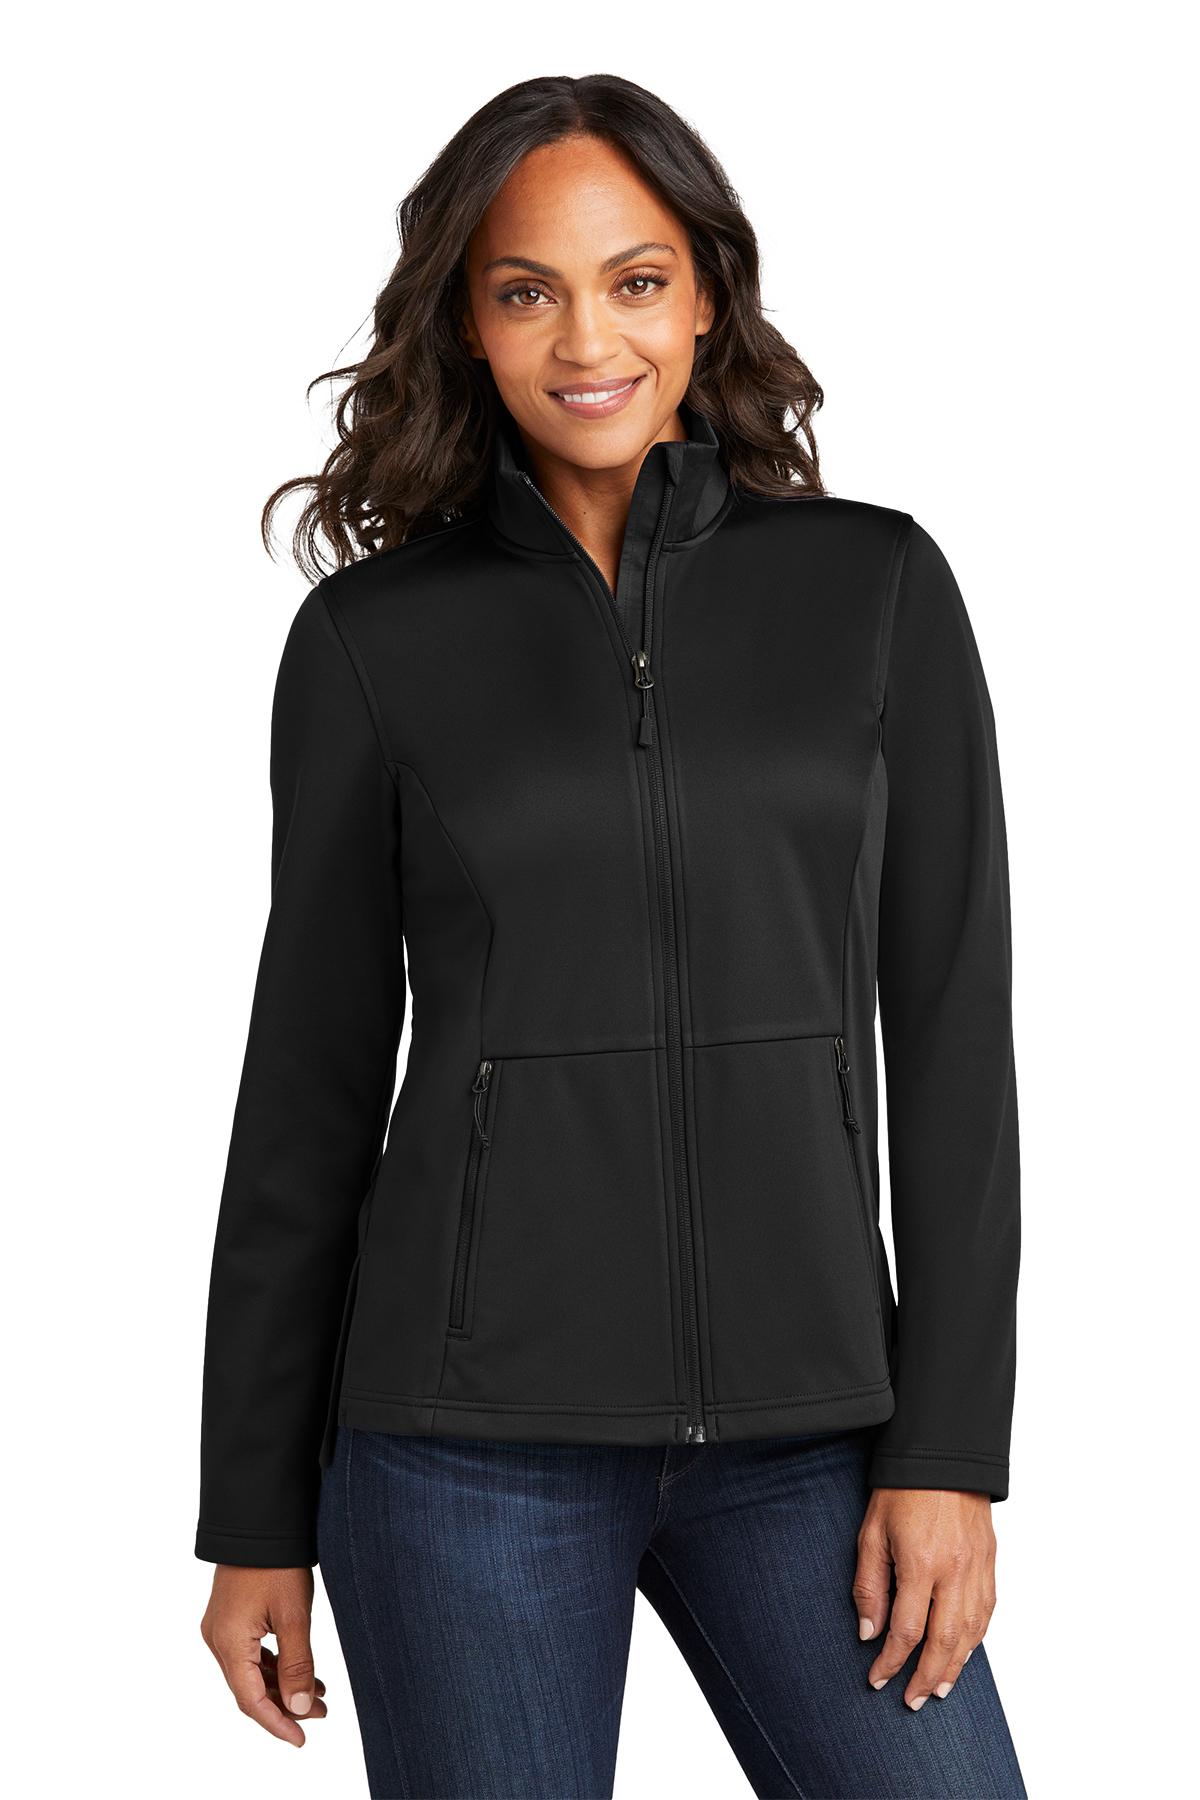 Jacket | SanMar Authority Product | Flexshell Ladies Port